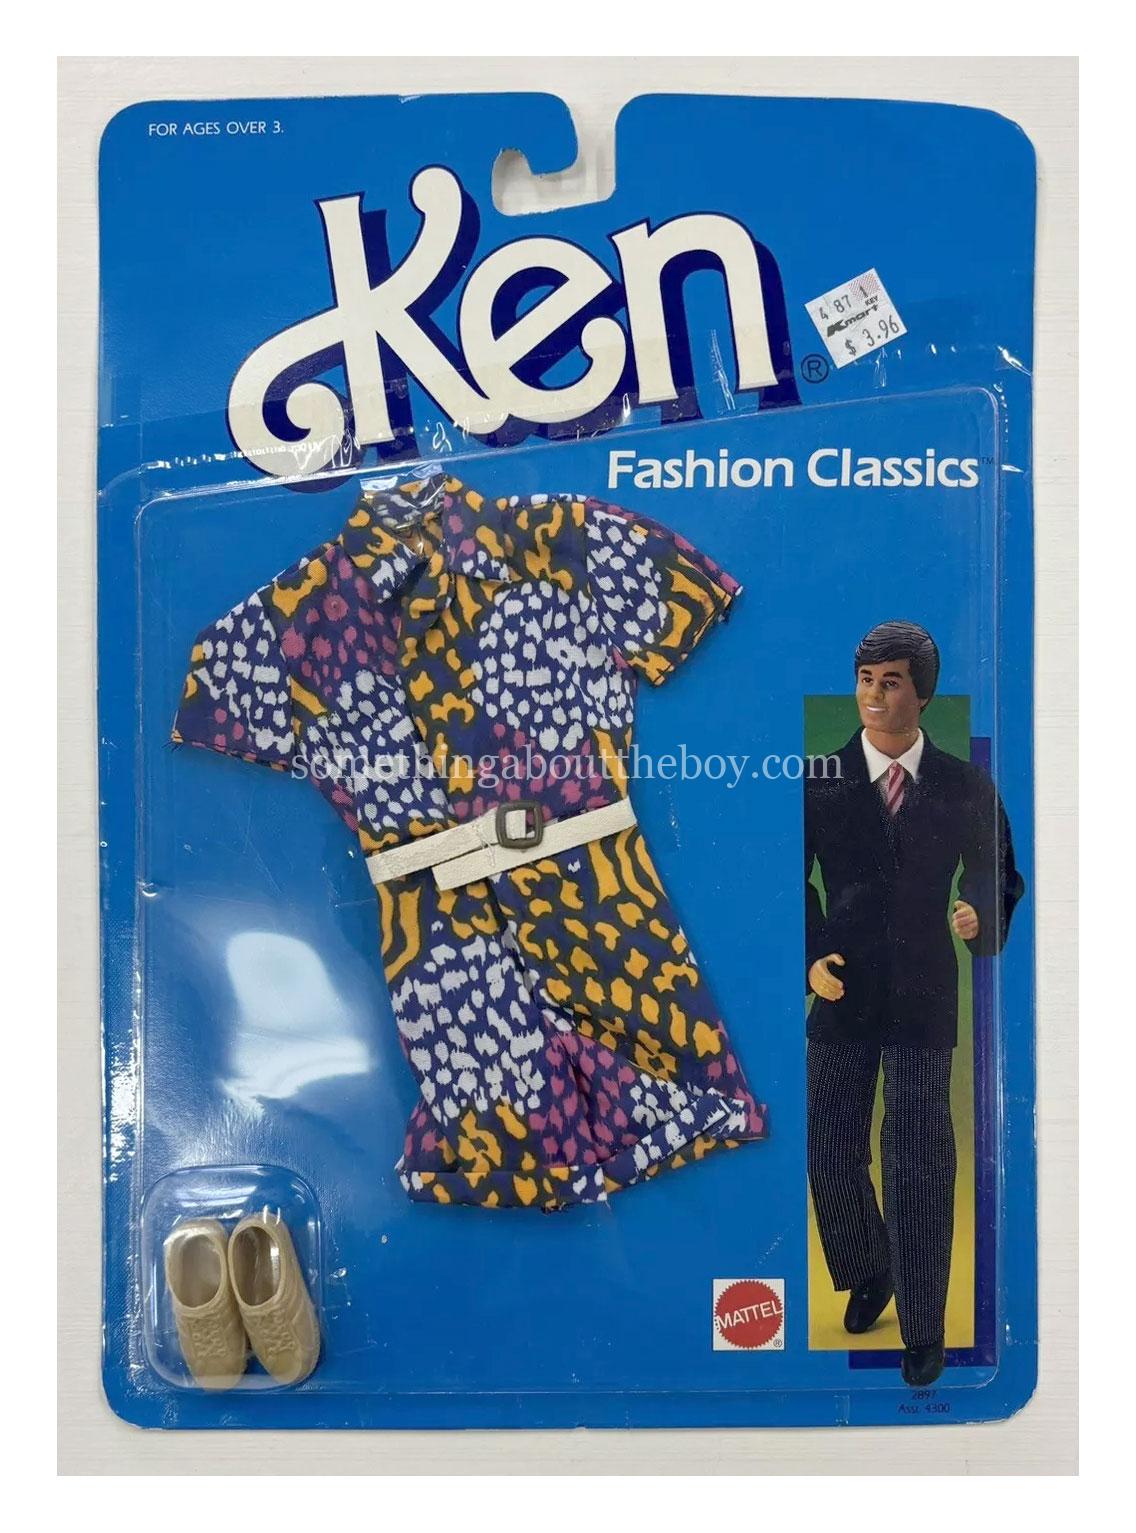 1986-87 Kmart Fashion Classics #2897 in original packaging